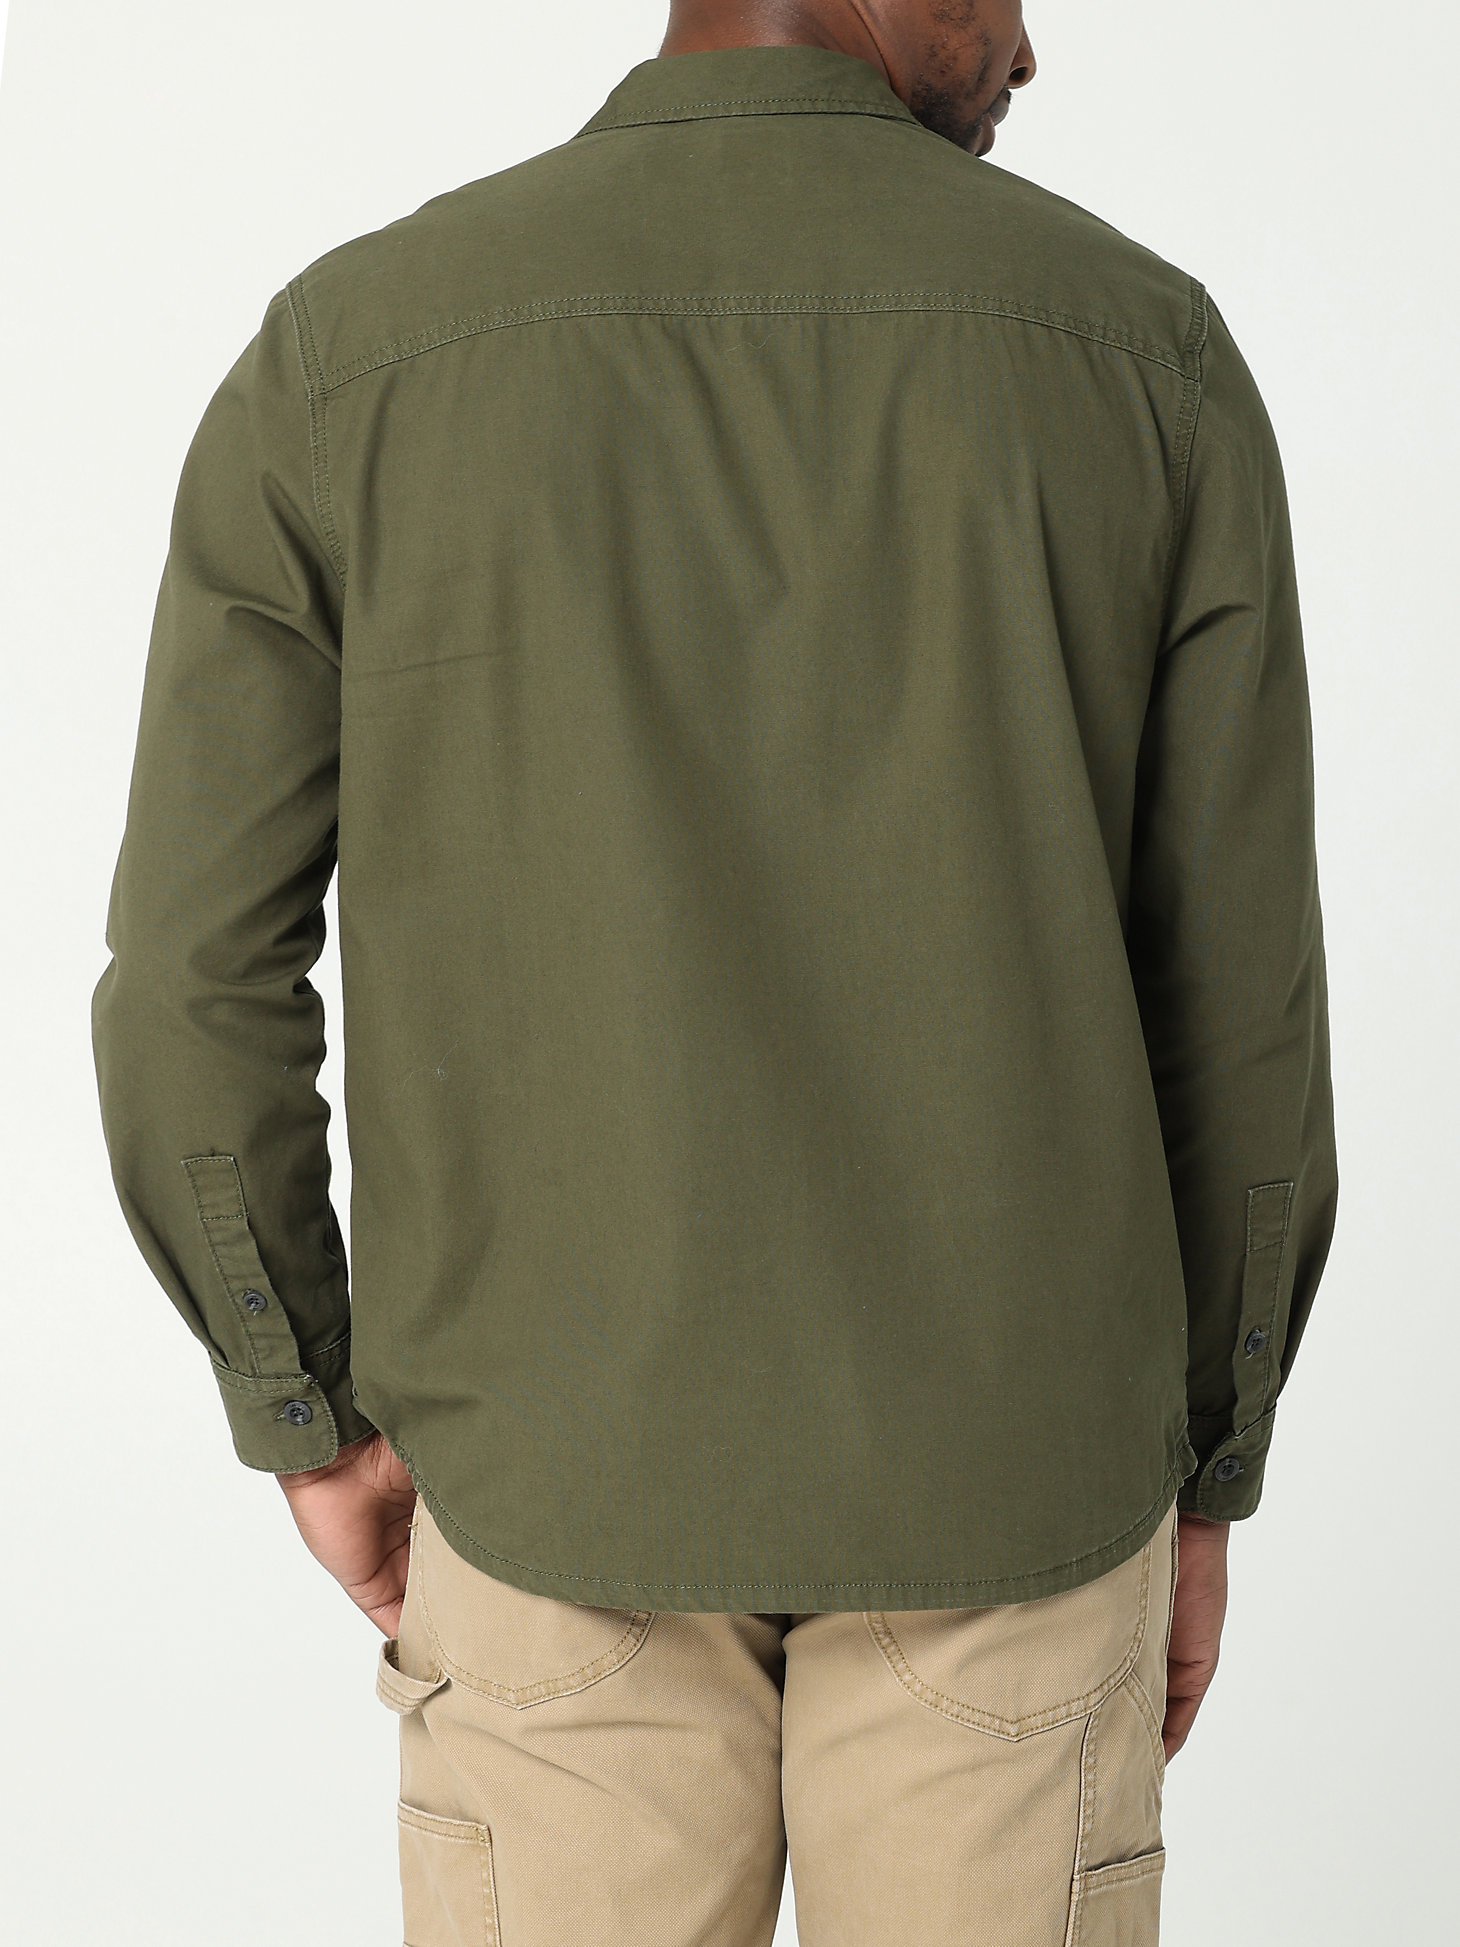 Men's Workwear Solid Overshirt in Kale alternative view 1